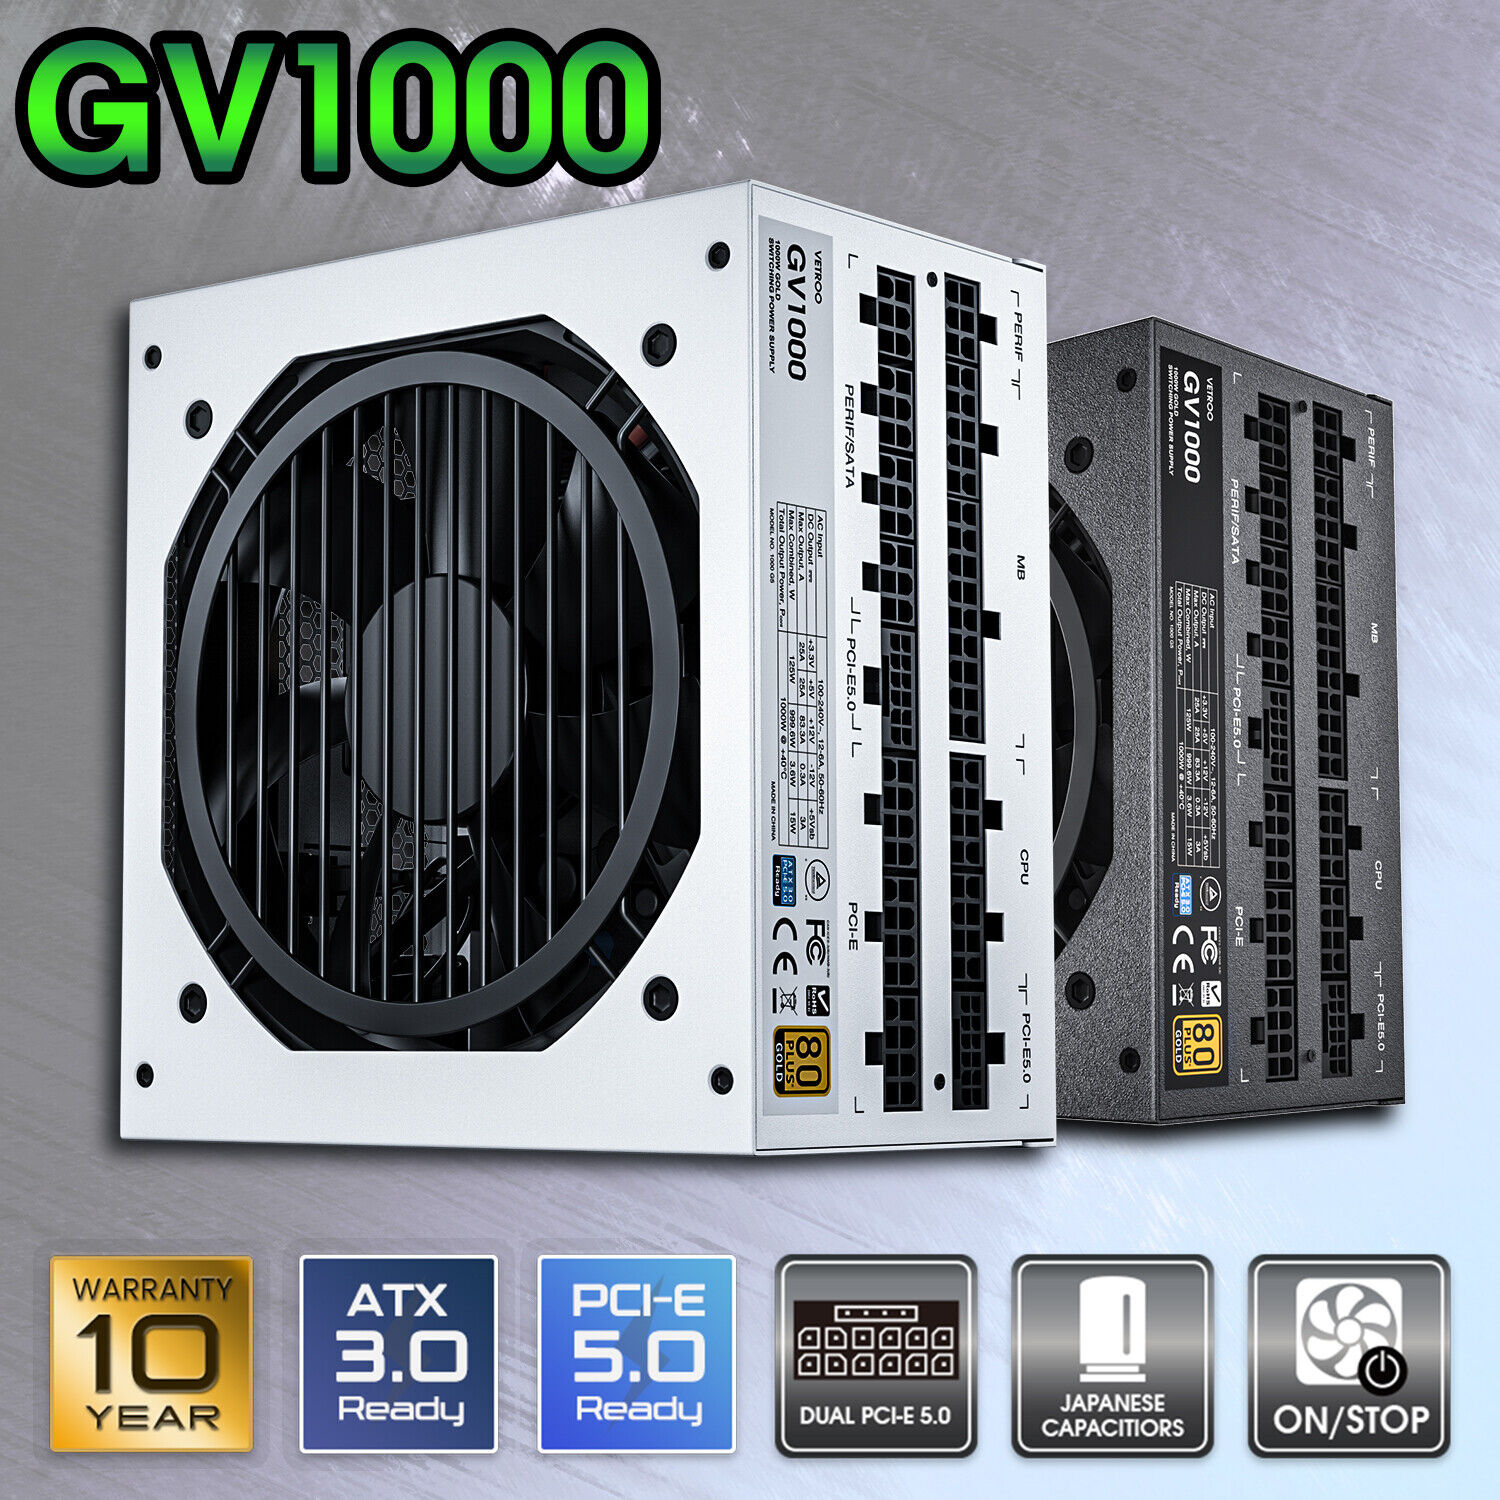 Vetroo 1000W Power Supply ATX 3.0 Ready Full Modular 80+ Gold 10 Year Warranty